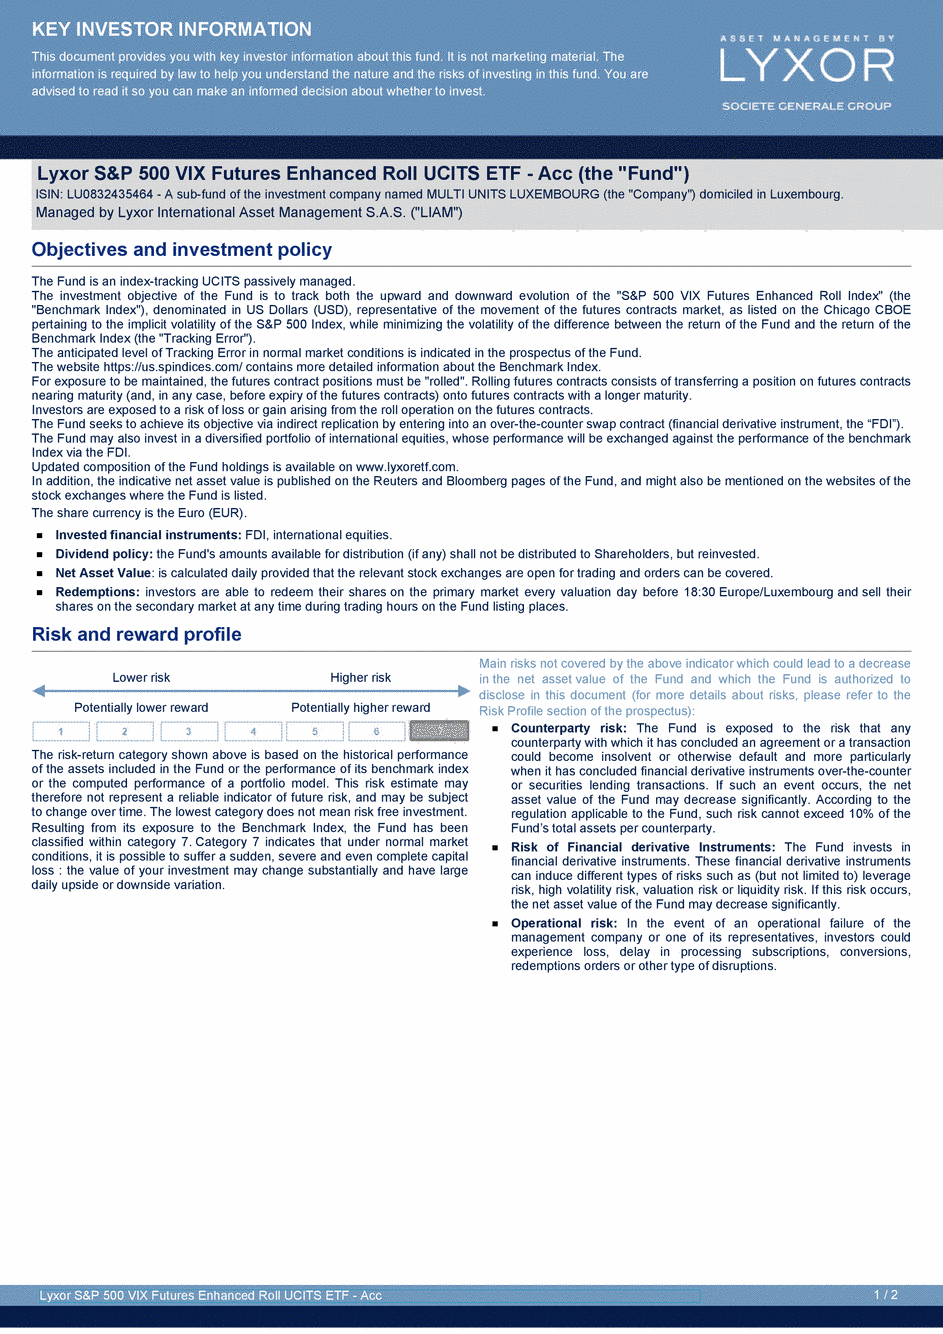 DICI Lyxor S&P 500 VIX Futures Enhanced Roll UCITS ETF - Acc - 19/02/2021 - Anglais